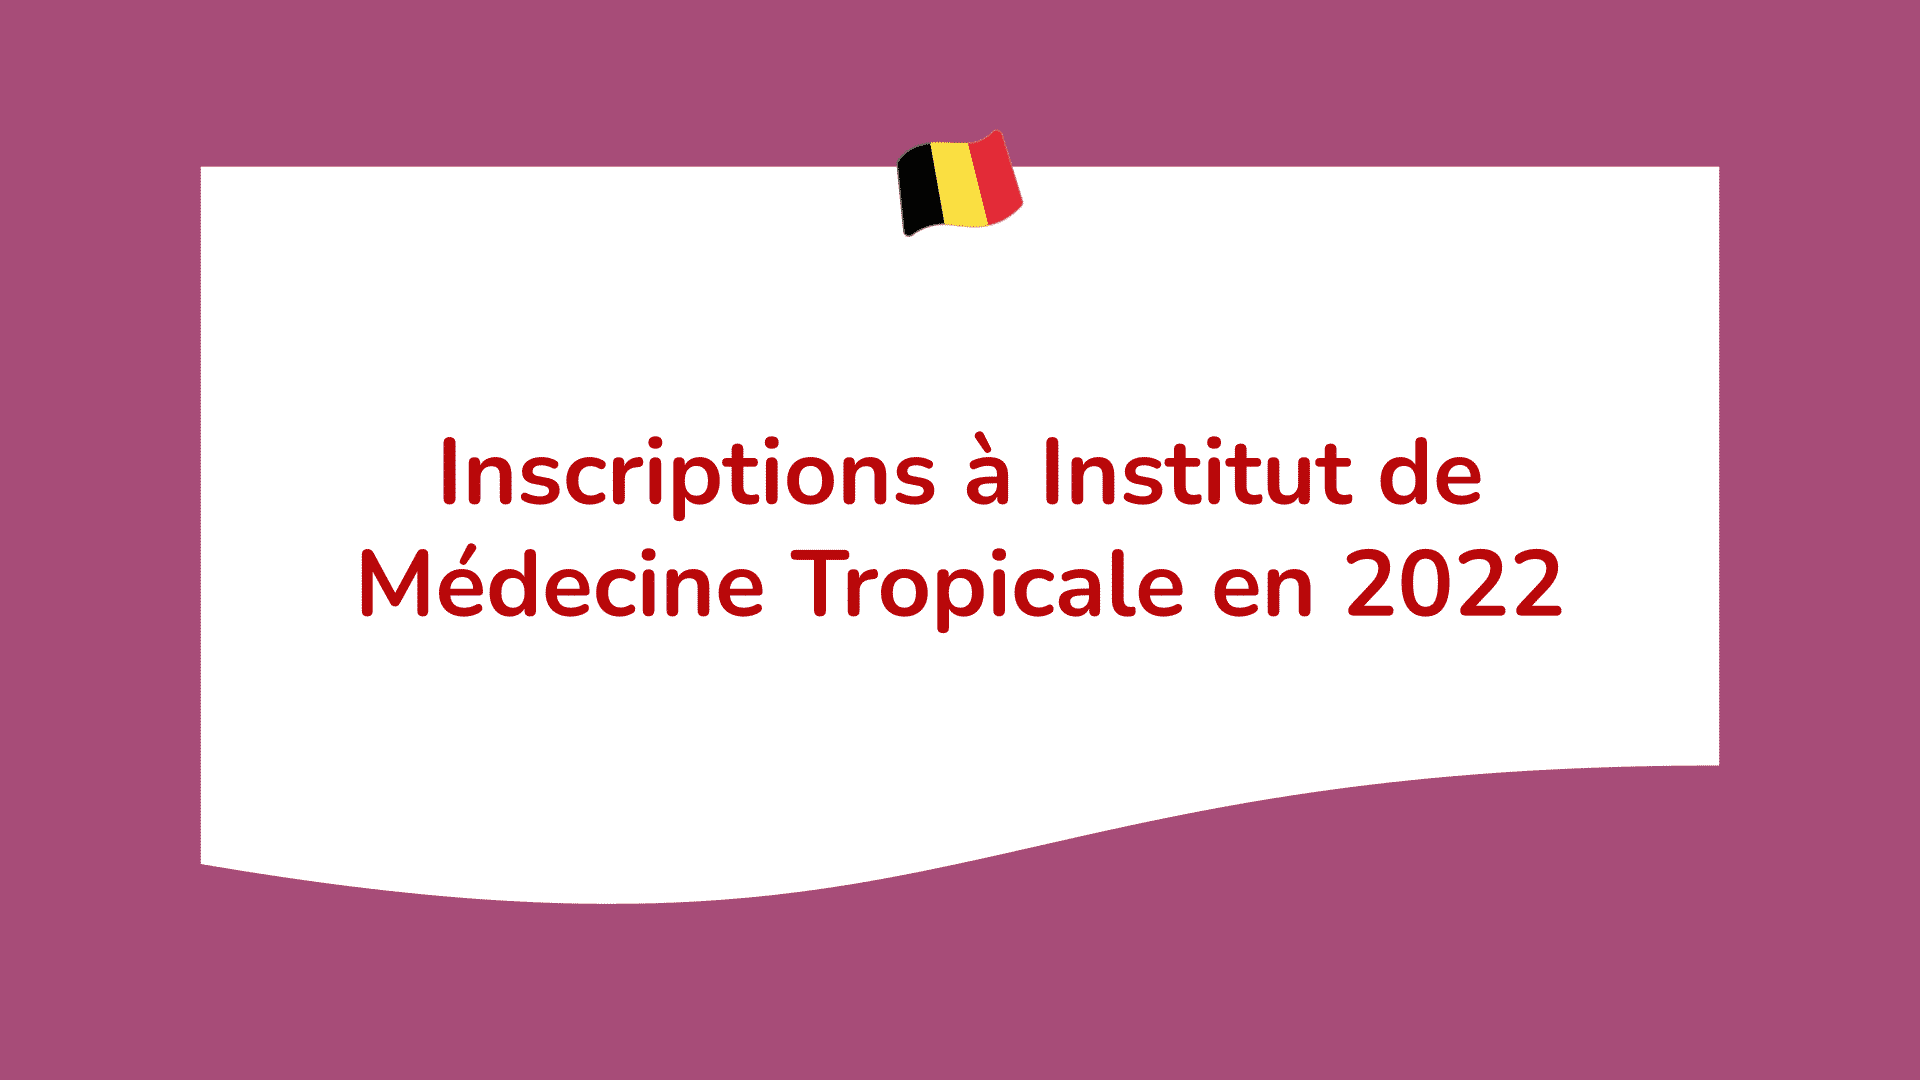 Institut de Médecine Tropicale